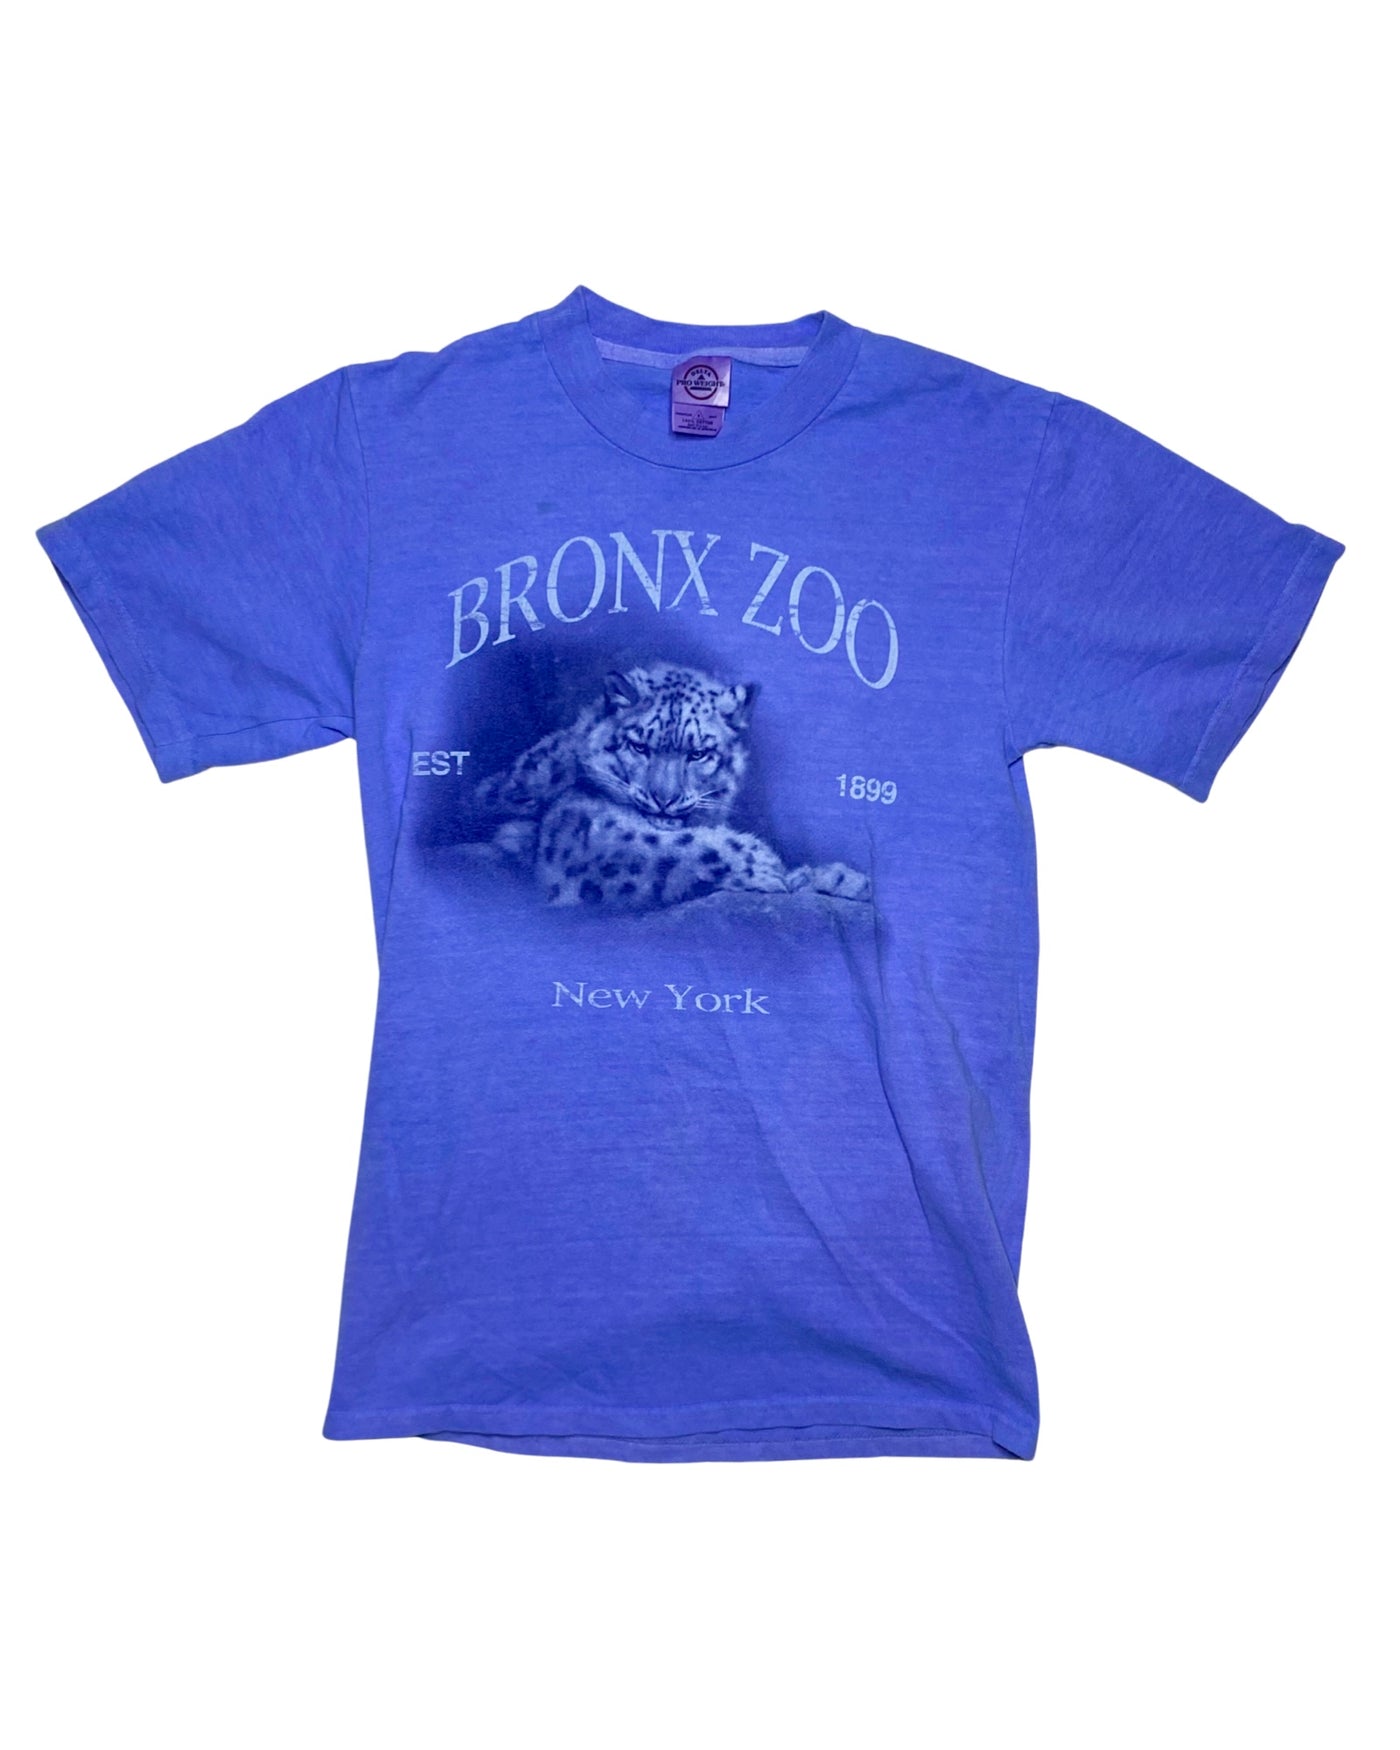 Vintage Bronx Zoo T-Shirt